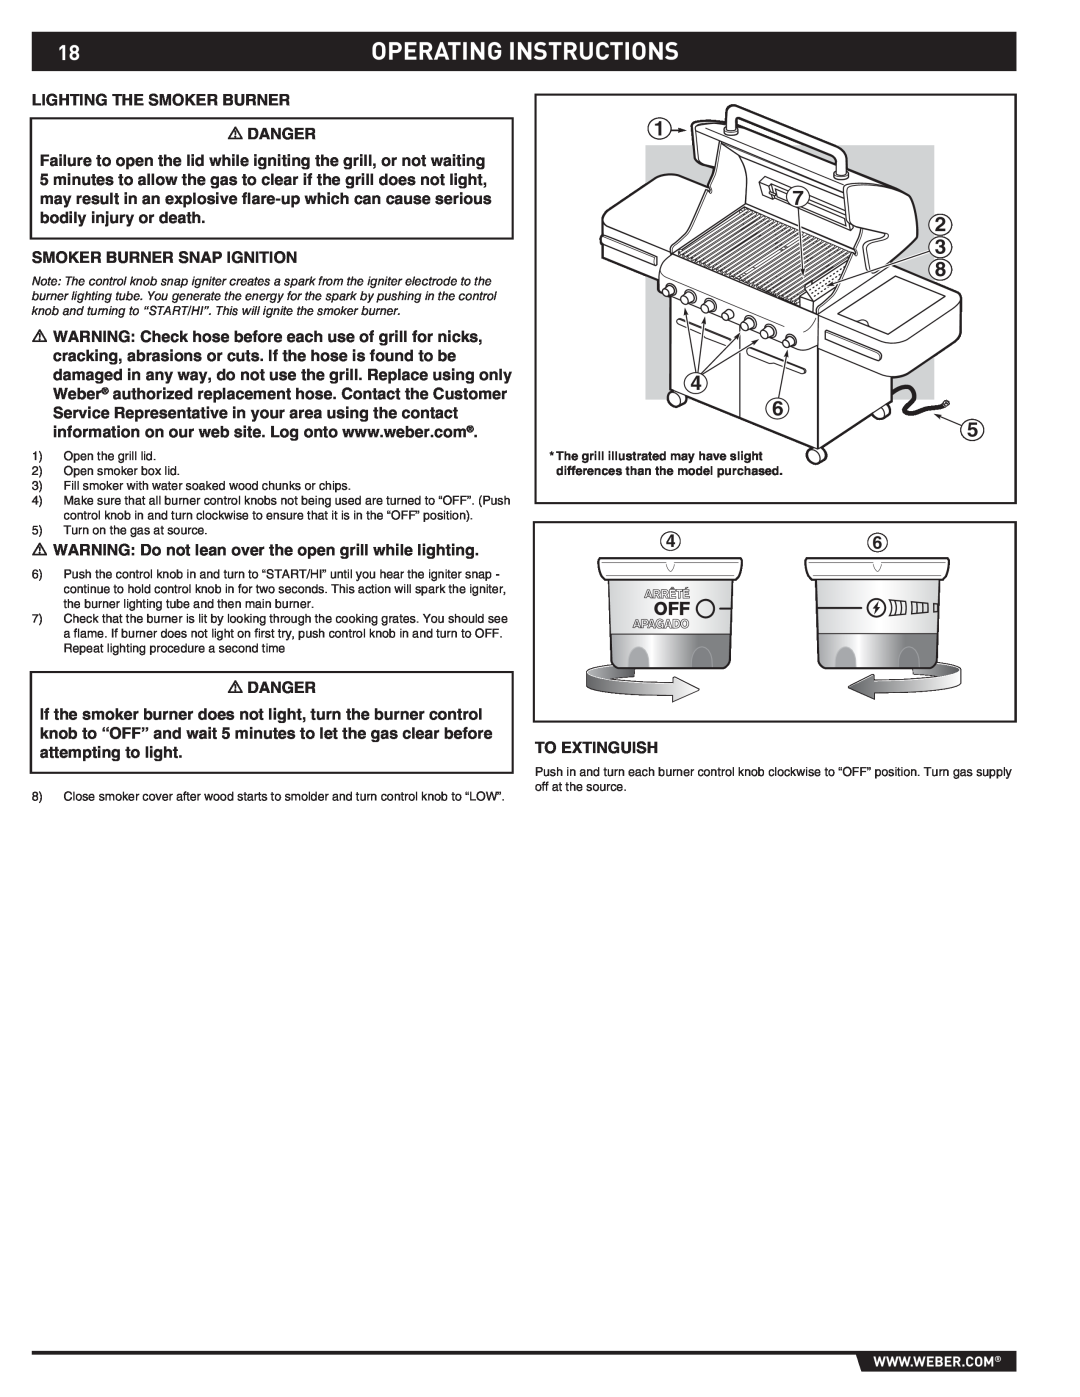 Weber S-470TM manual Operating Instructions 